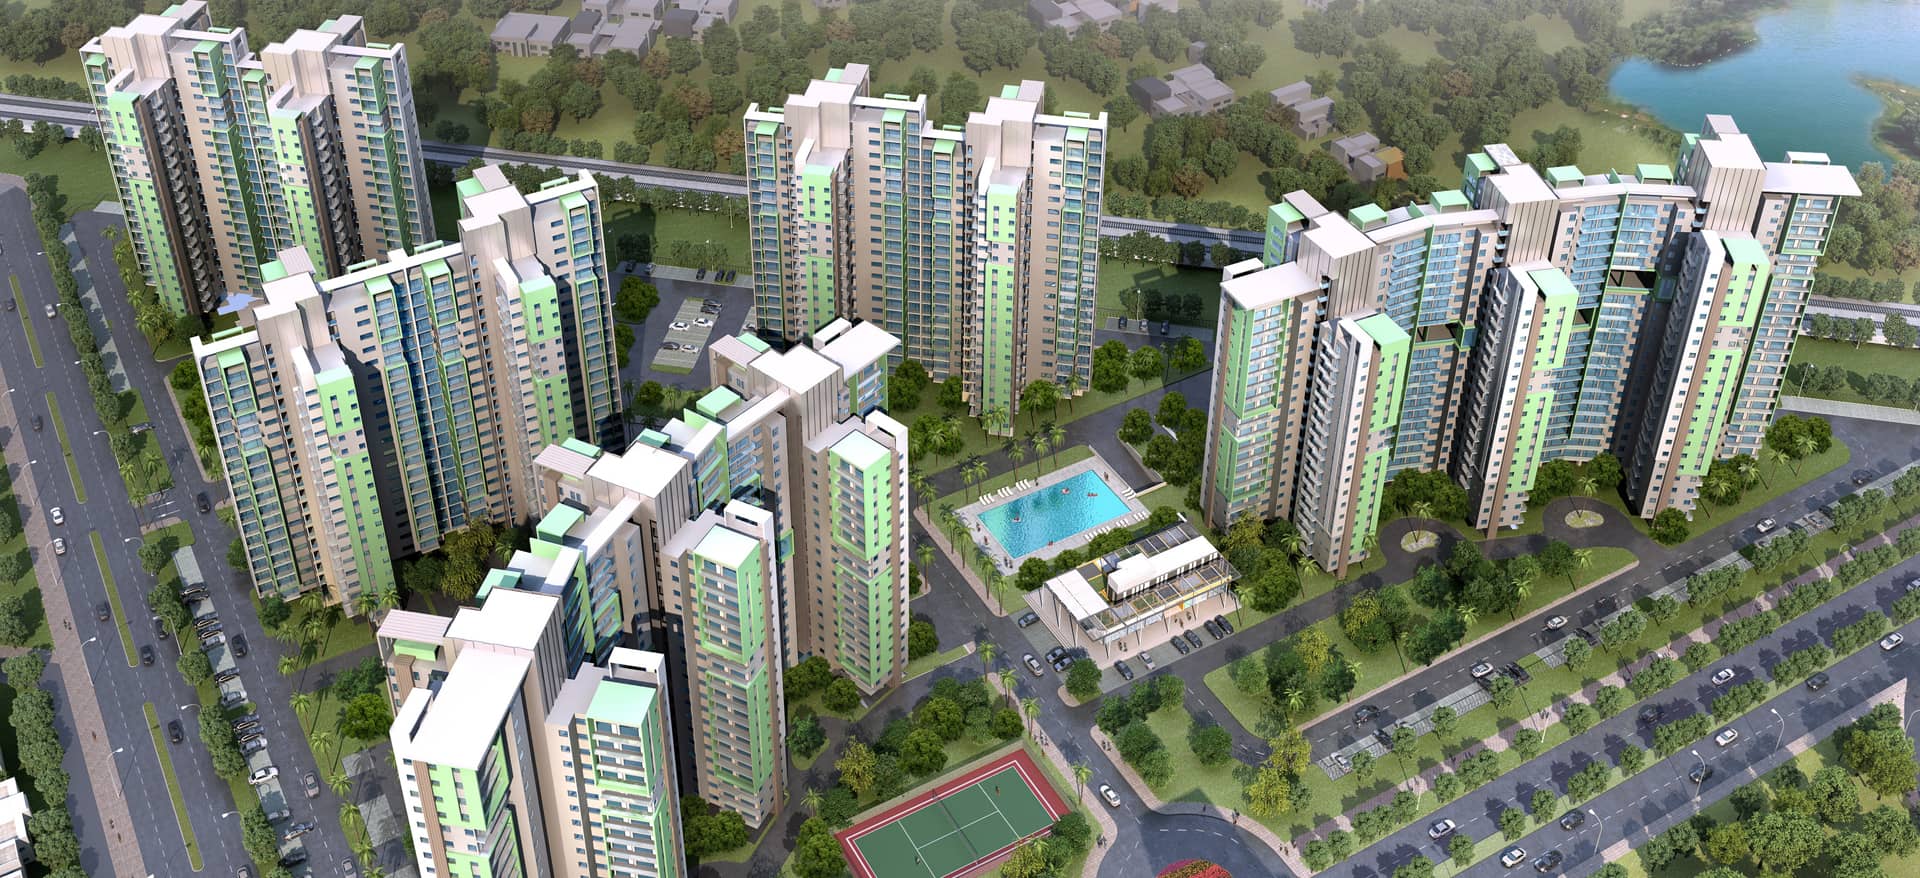 Sector M Group Housing Development, Uttar Pradesh, India